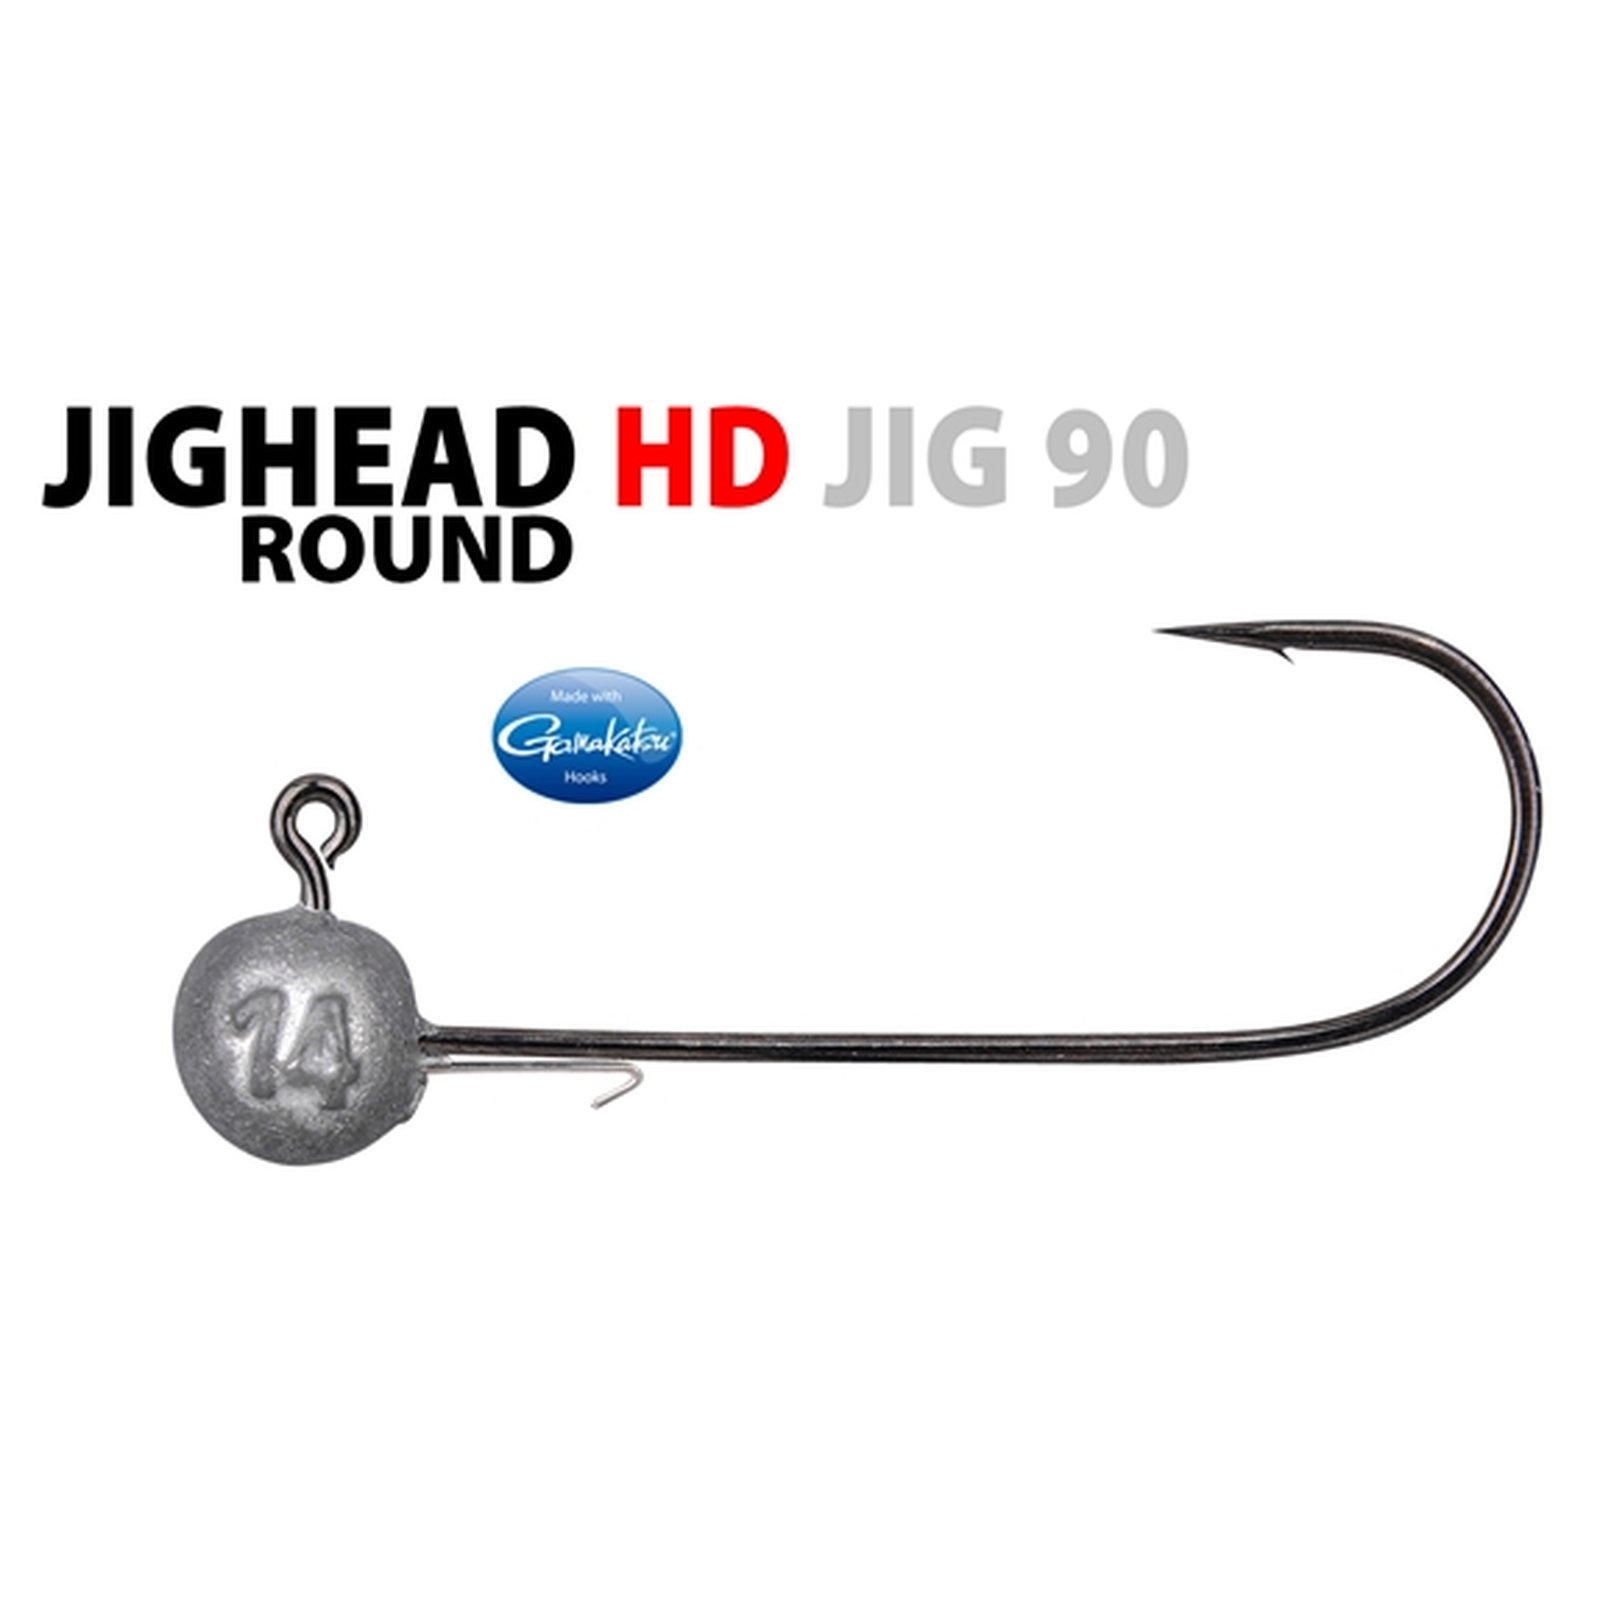 SPRO Round Jighead HD Jig 90 | Gr.4/0 | 3 Stk. 28g